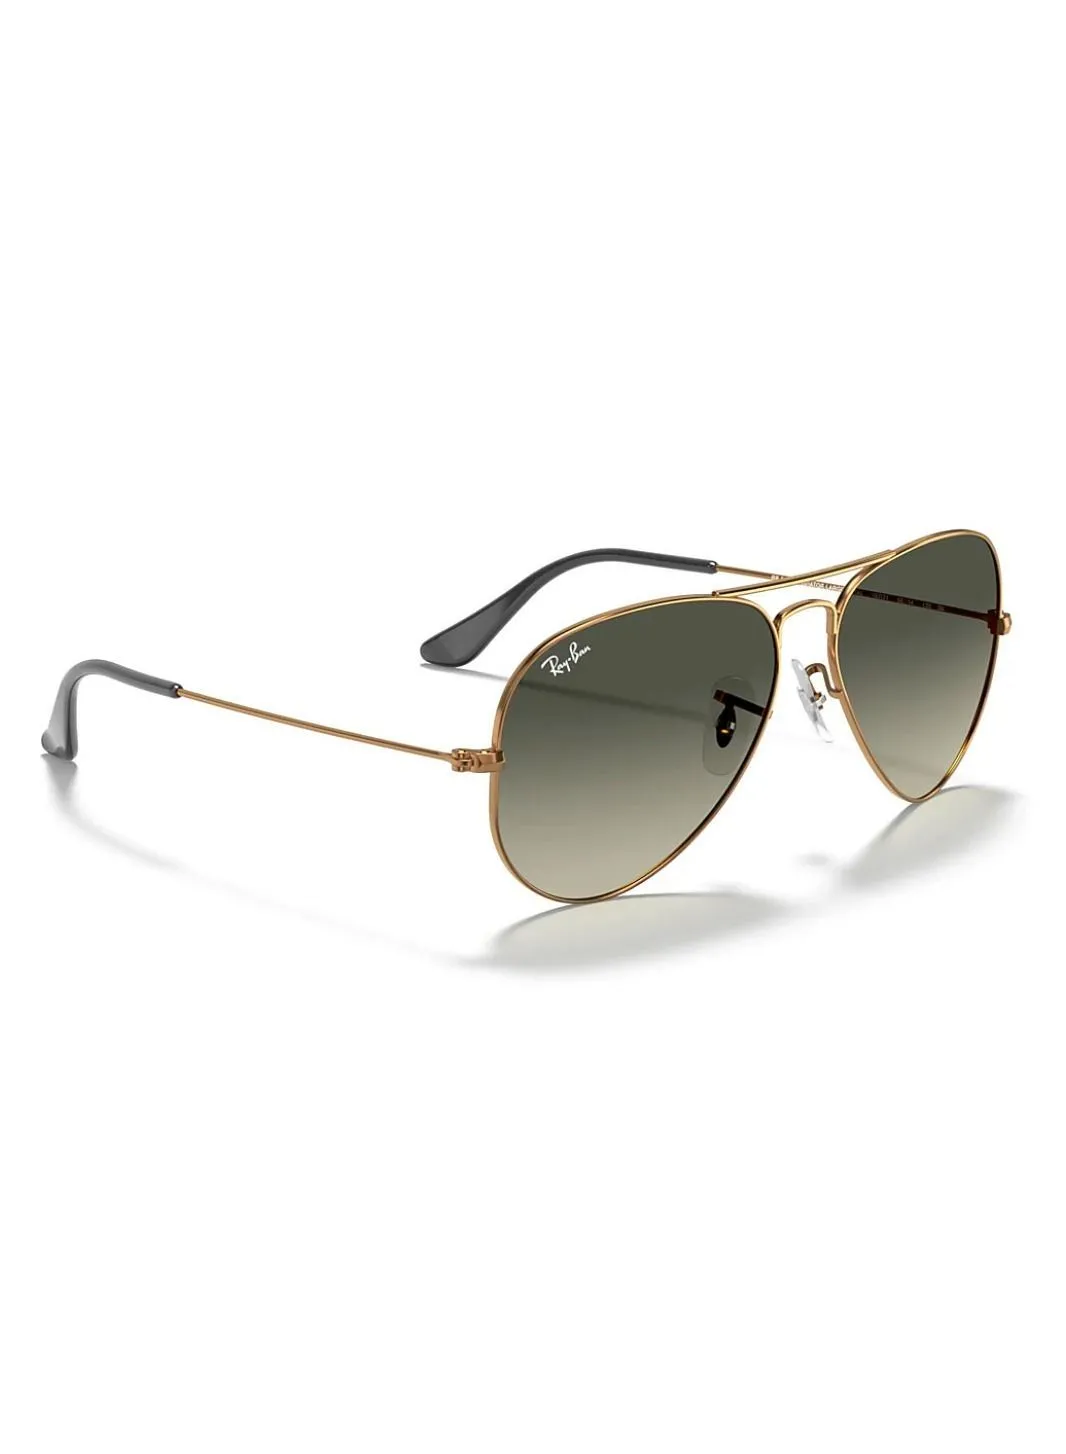 Ray-Ban Gradient Aviator Sunglasses - Lens Size: 58 mm